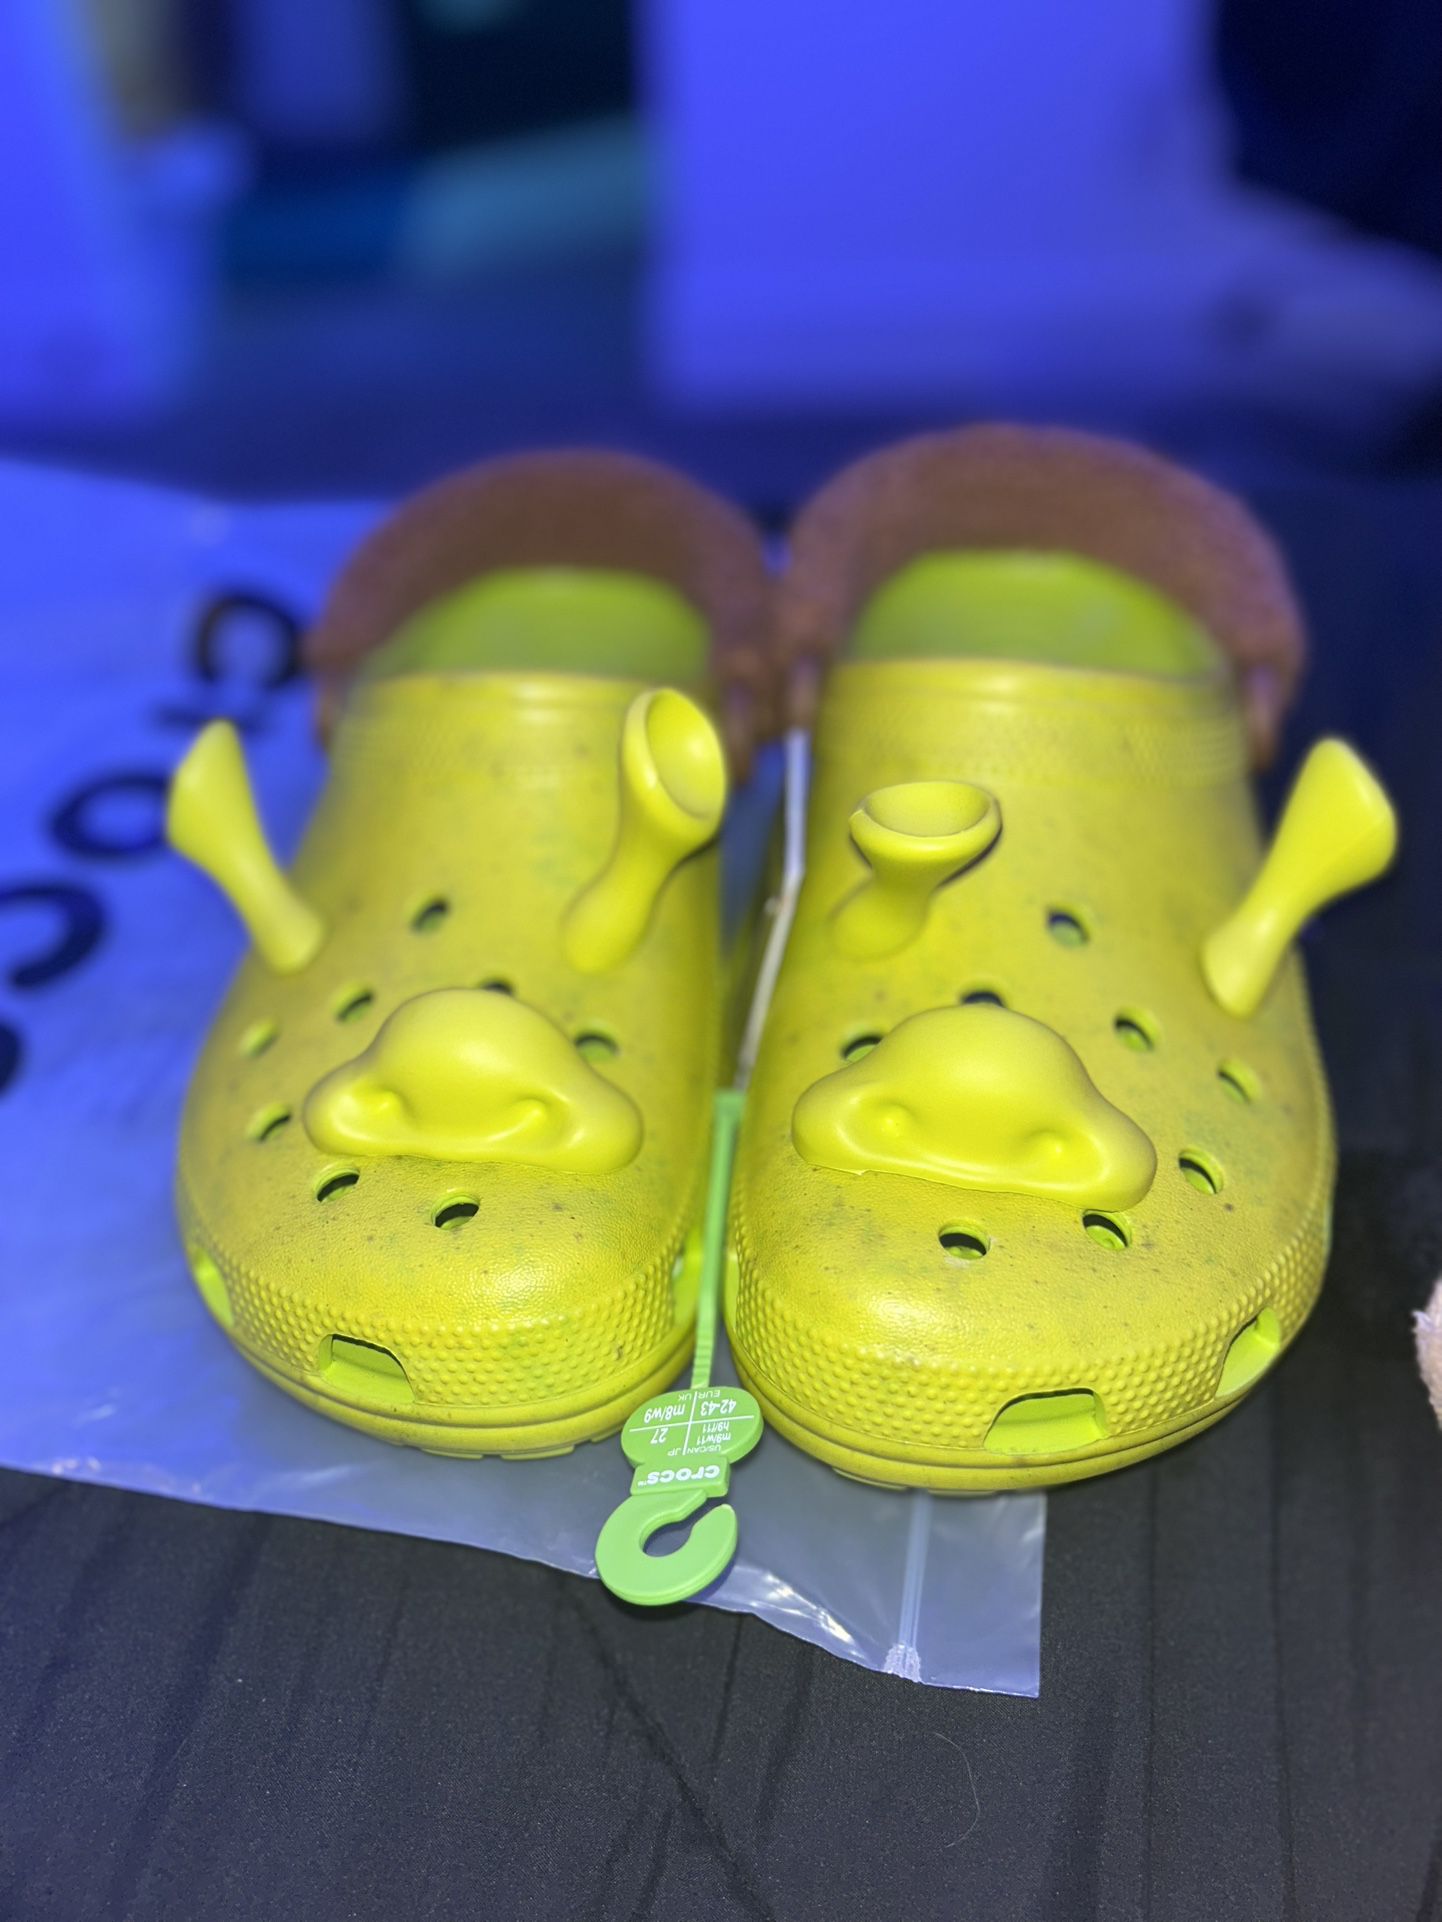 Shrek Crocs 9m 11W Never Tried On 